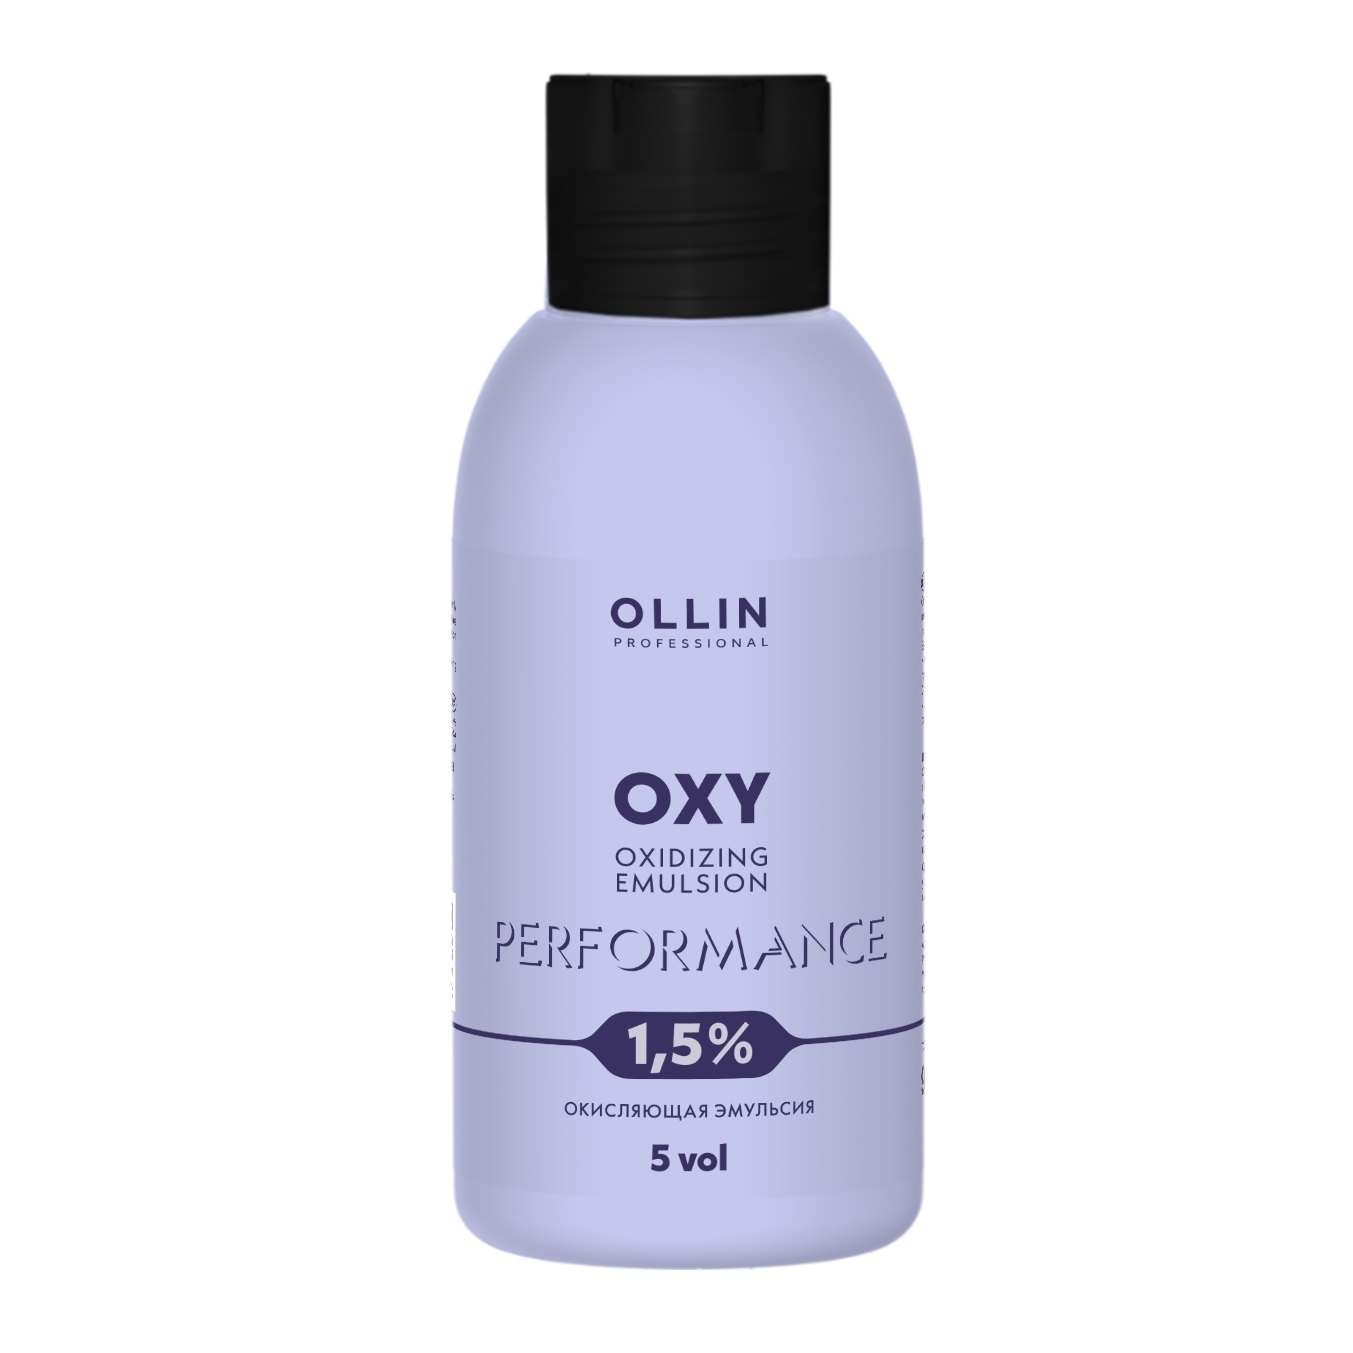 Ollin Professional Окисляющая эмульсия 1,5% 5 vol, 90 мл (Ollin Professional, Performance)